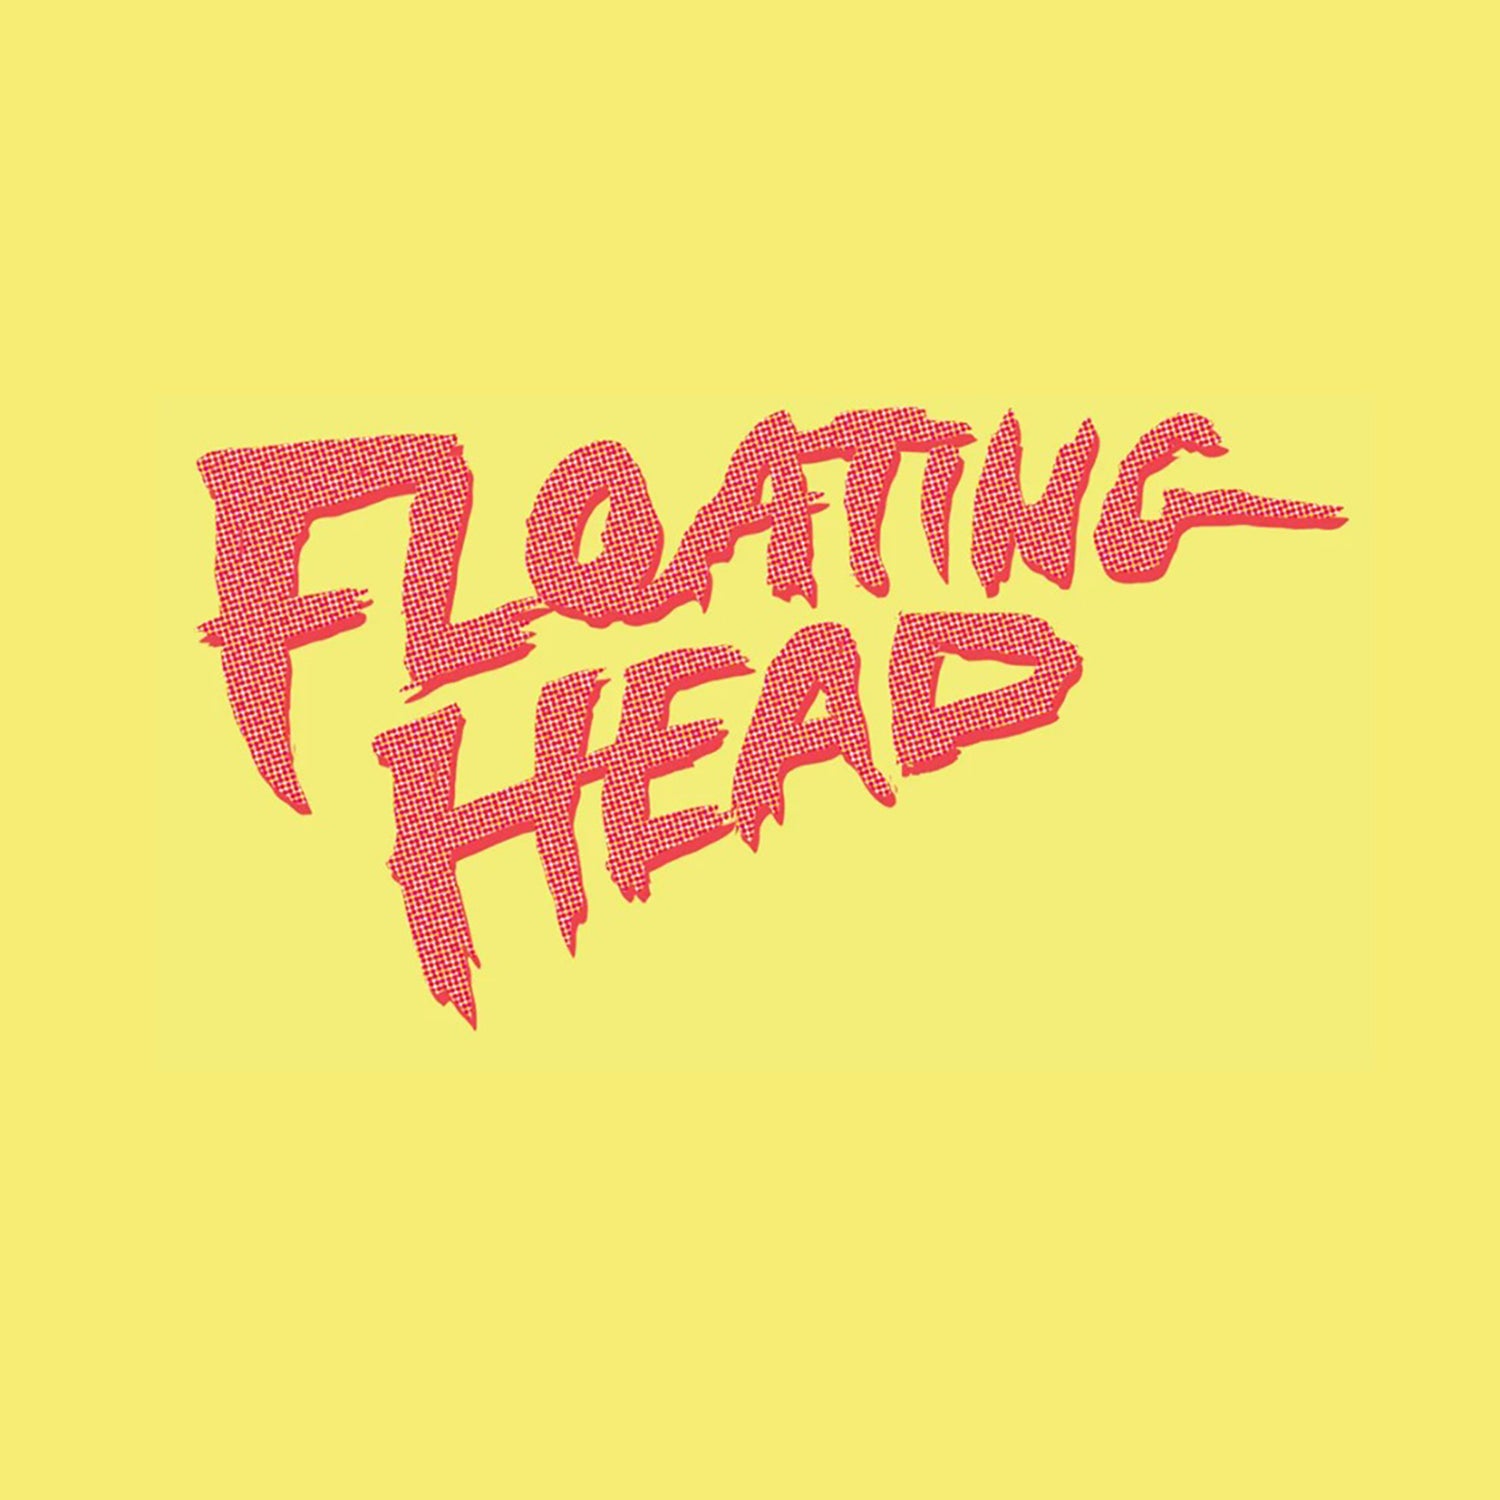 Floating Head